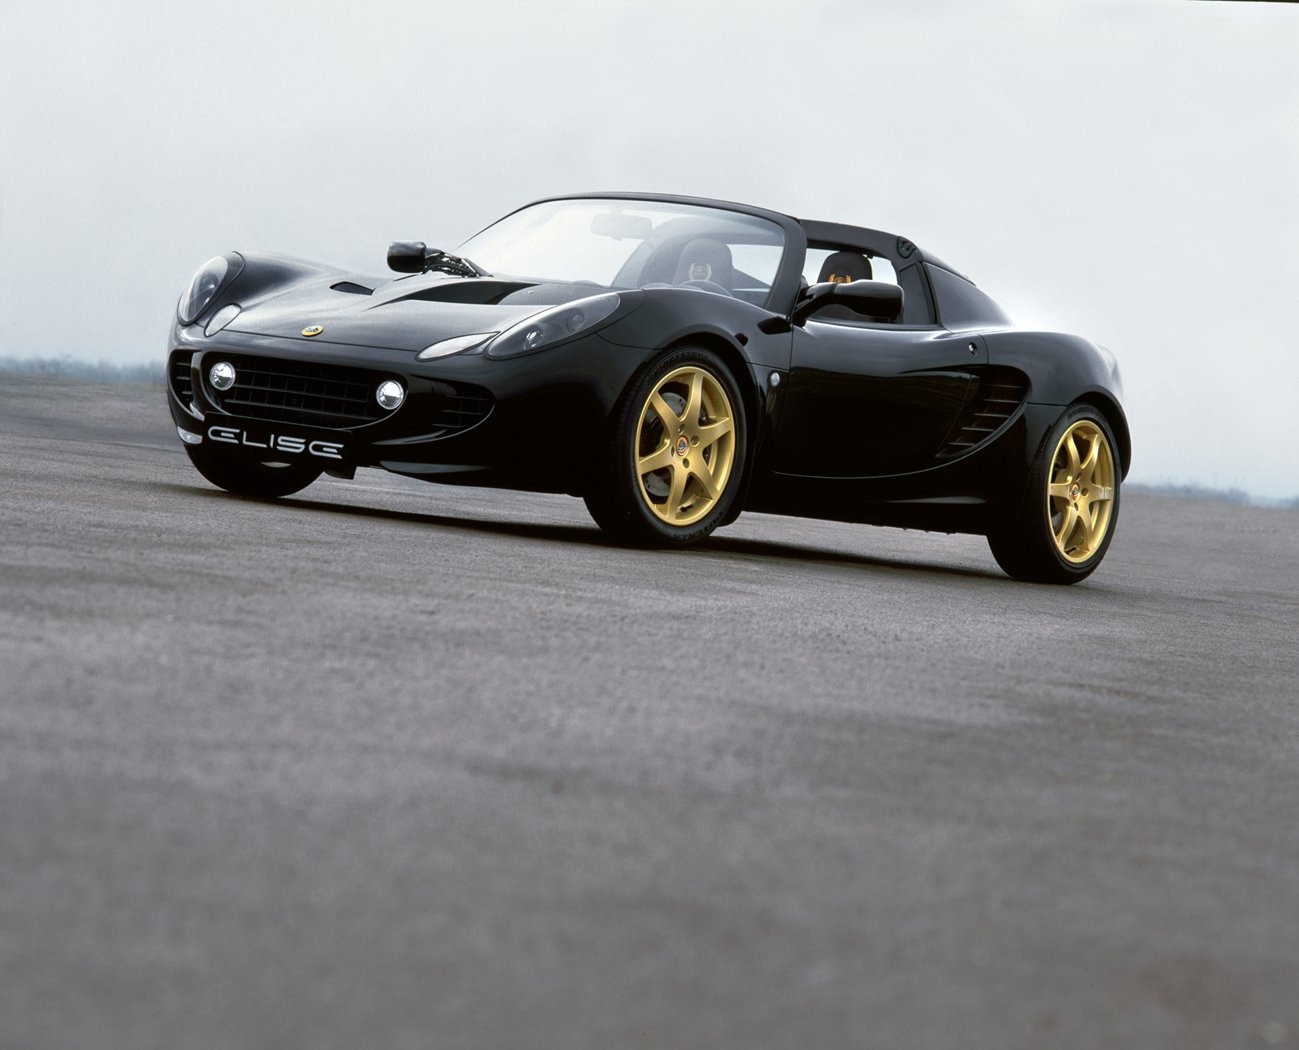 Gold Sports Car A black car deserves gold